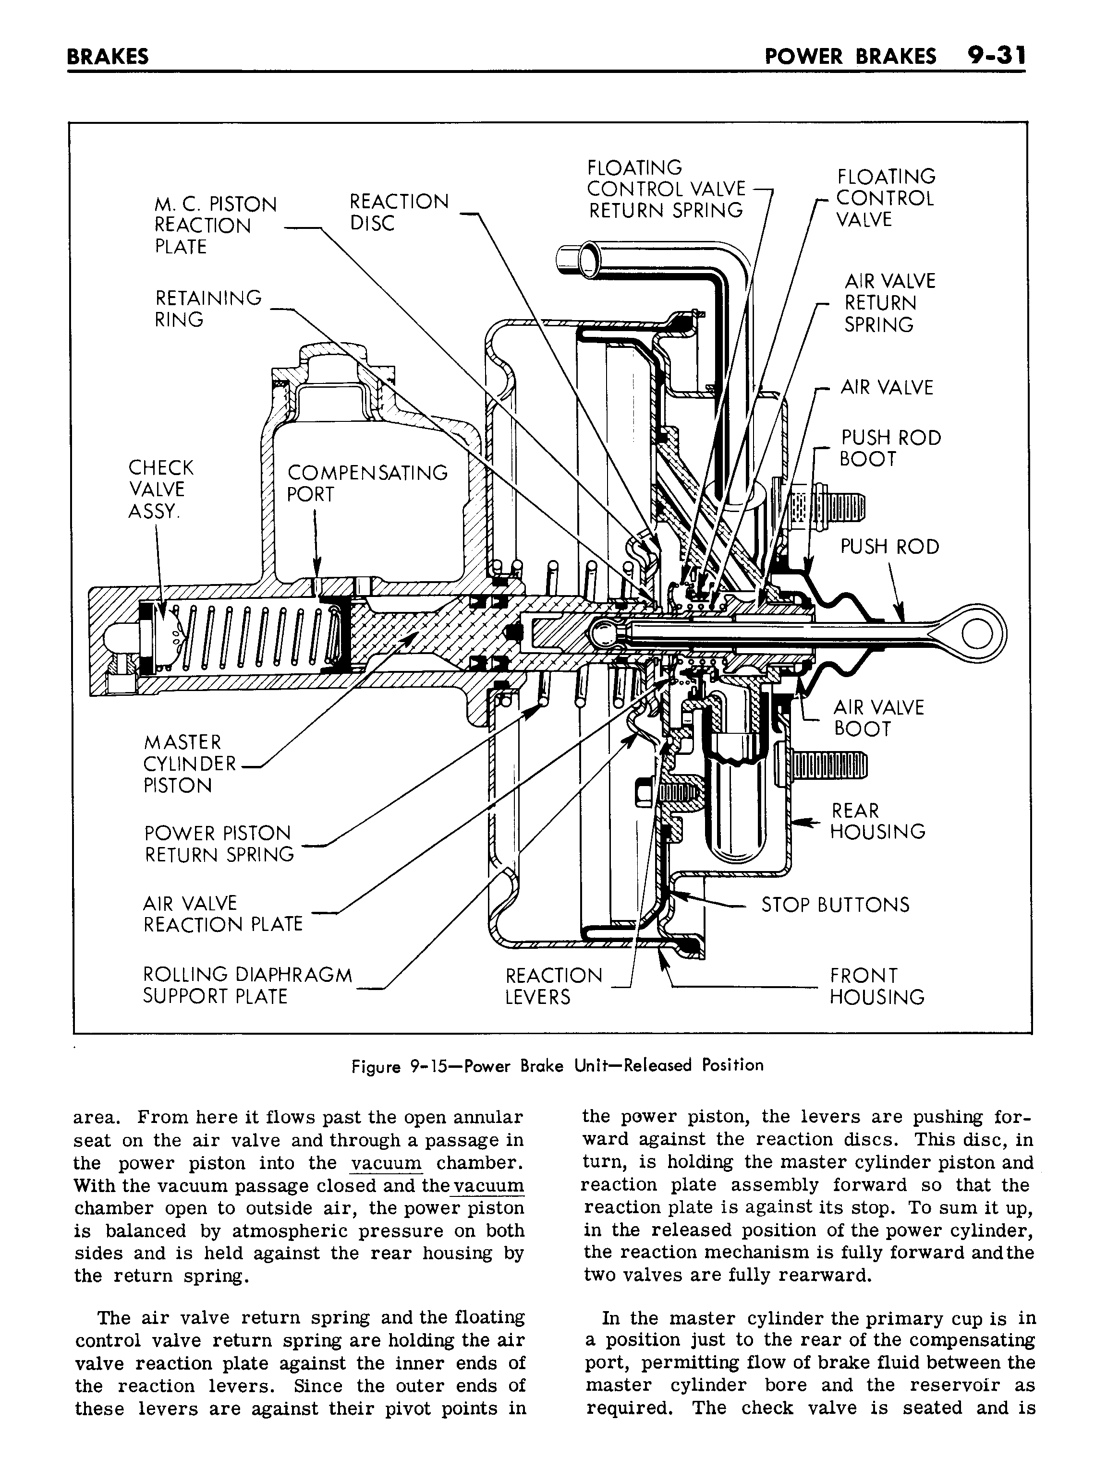 n_09 1961 Buick Shop Manual - Brakes-031-031.jpg